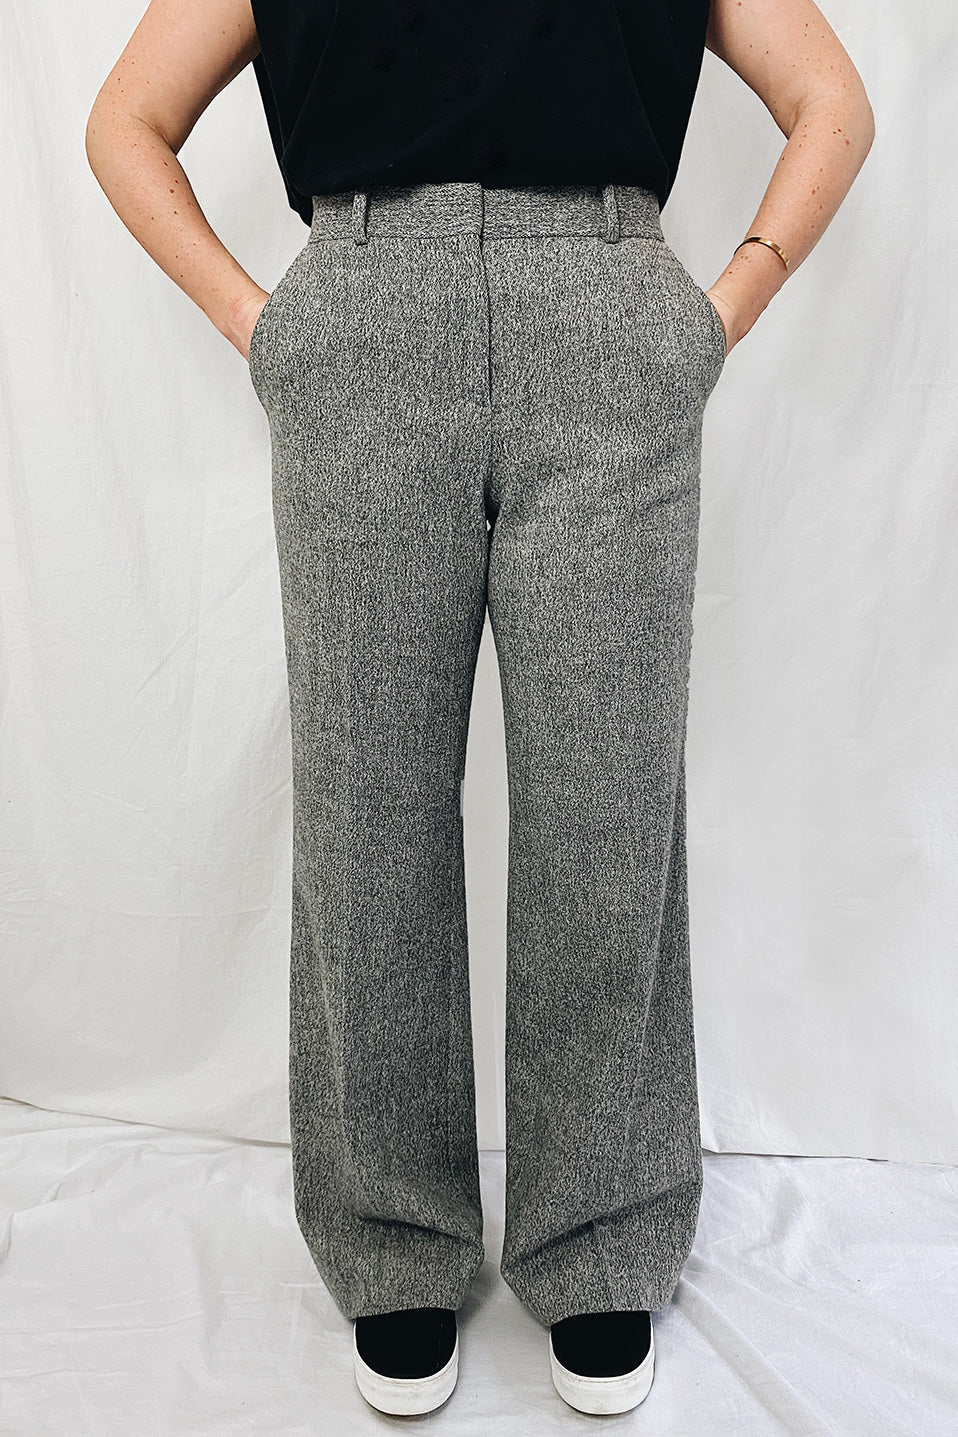 Amii Minimalist Spring Women's Jeans Fashion High Waist Wide Leg Pants  Streetwear Casual Pants Female Denim Trousers 12240054